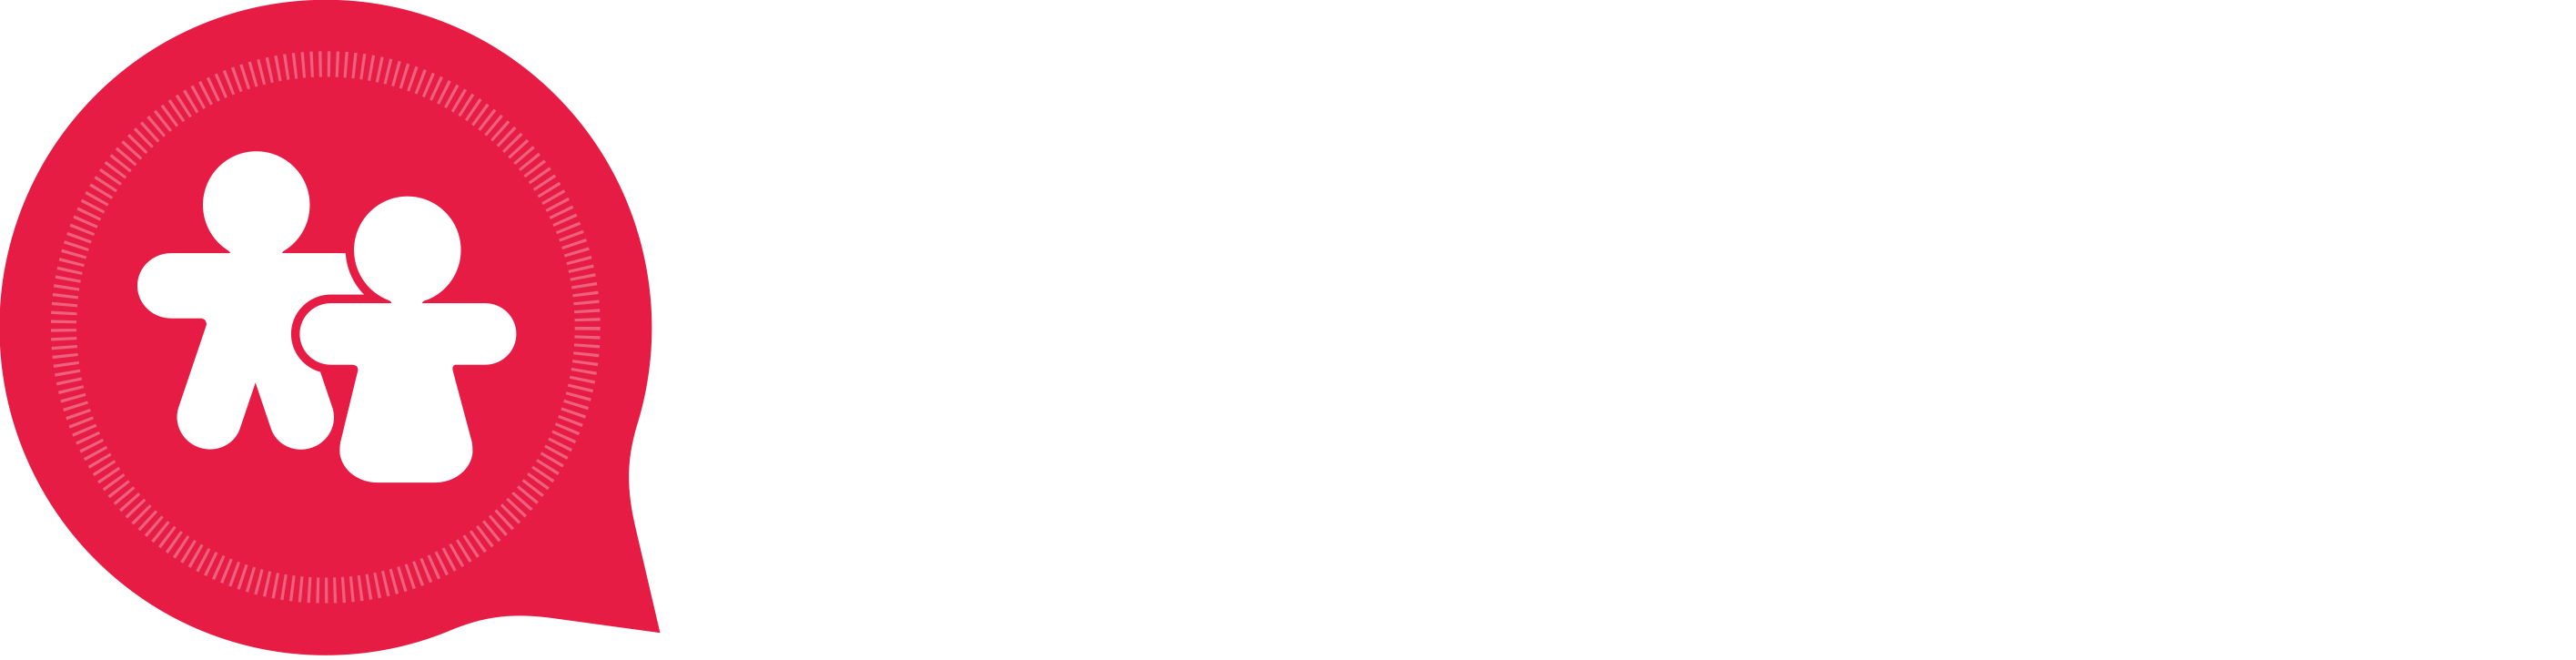 Søve – Lekeapparater siden 1975